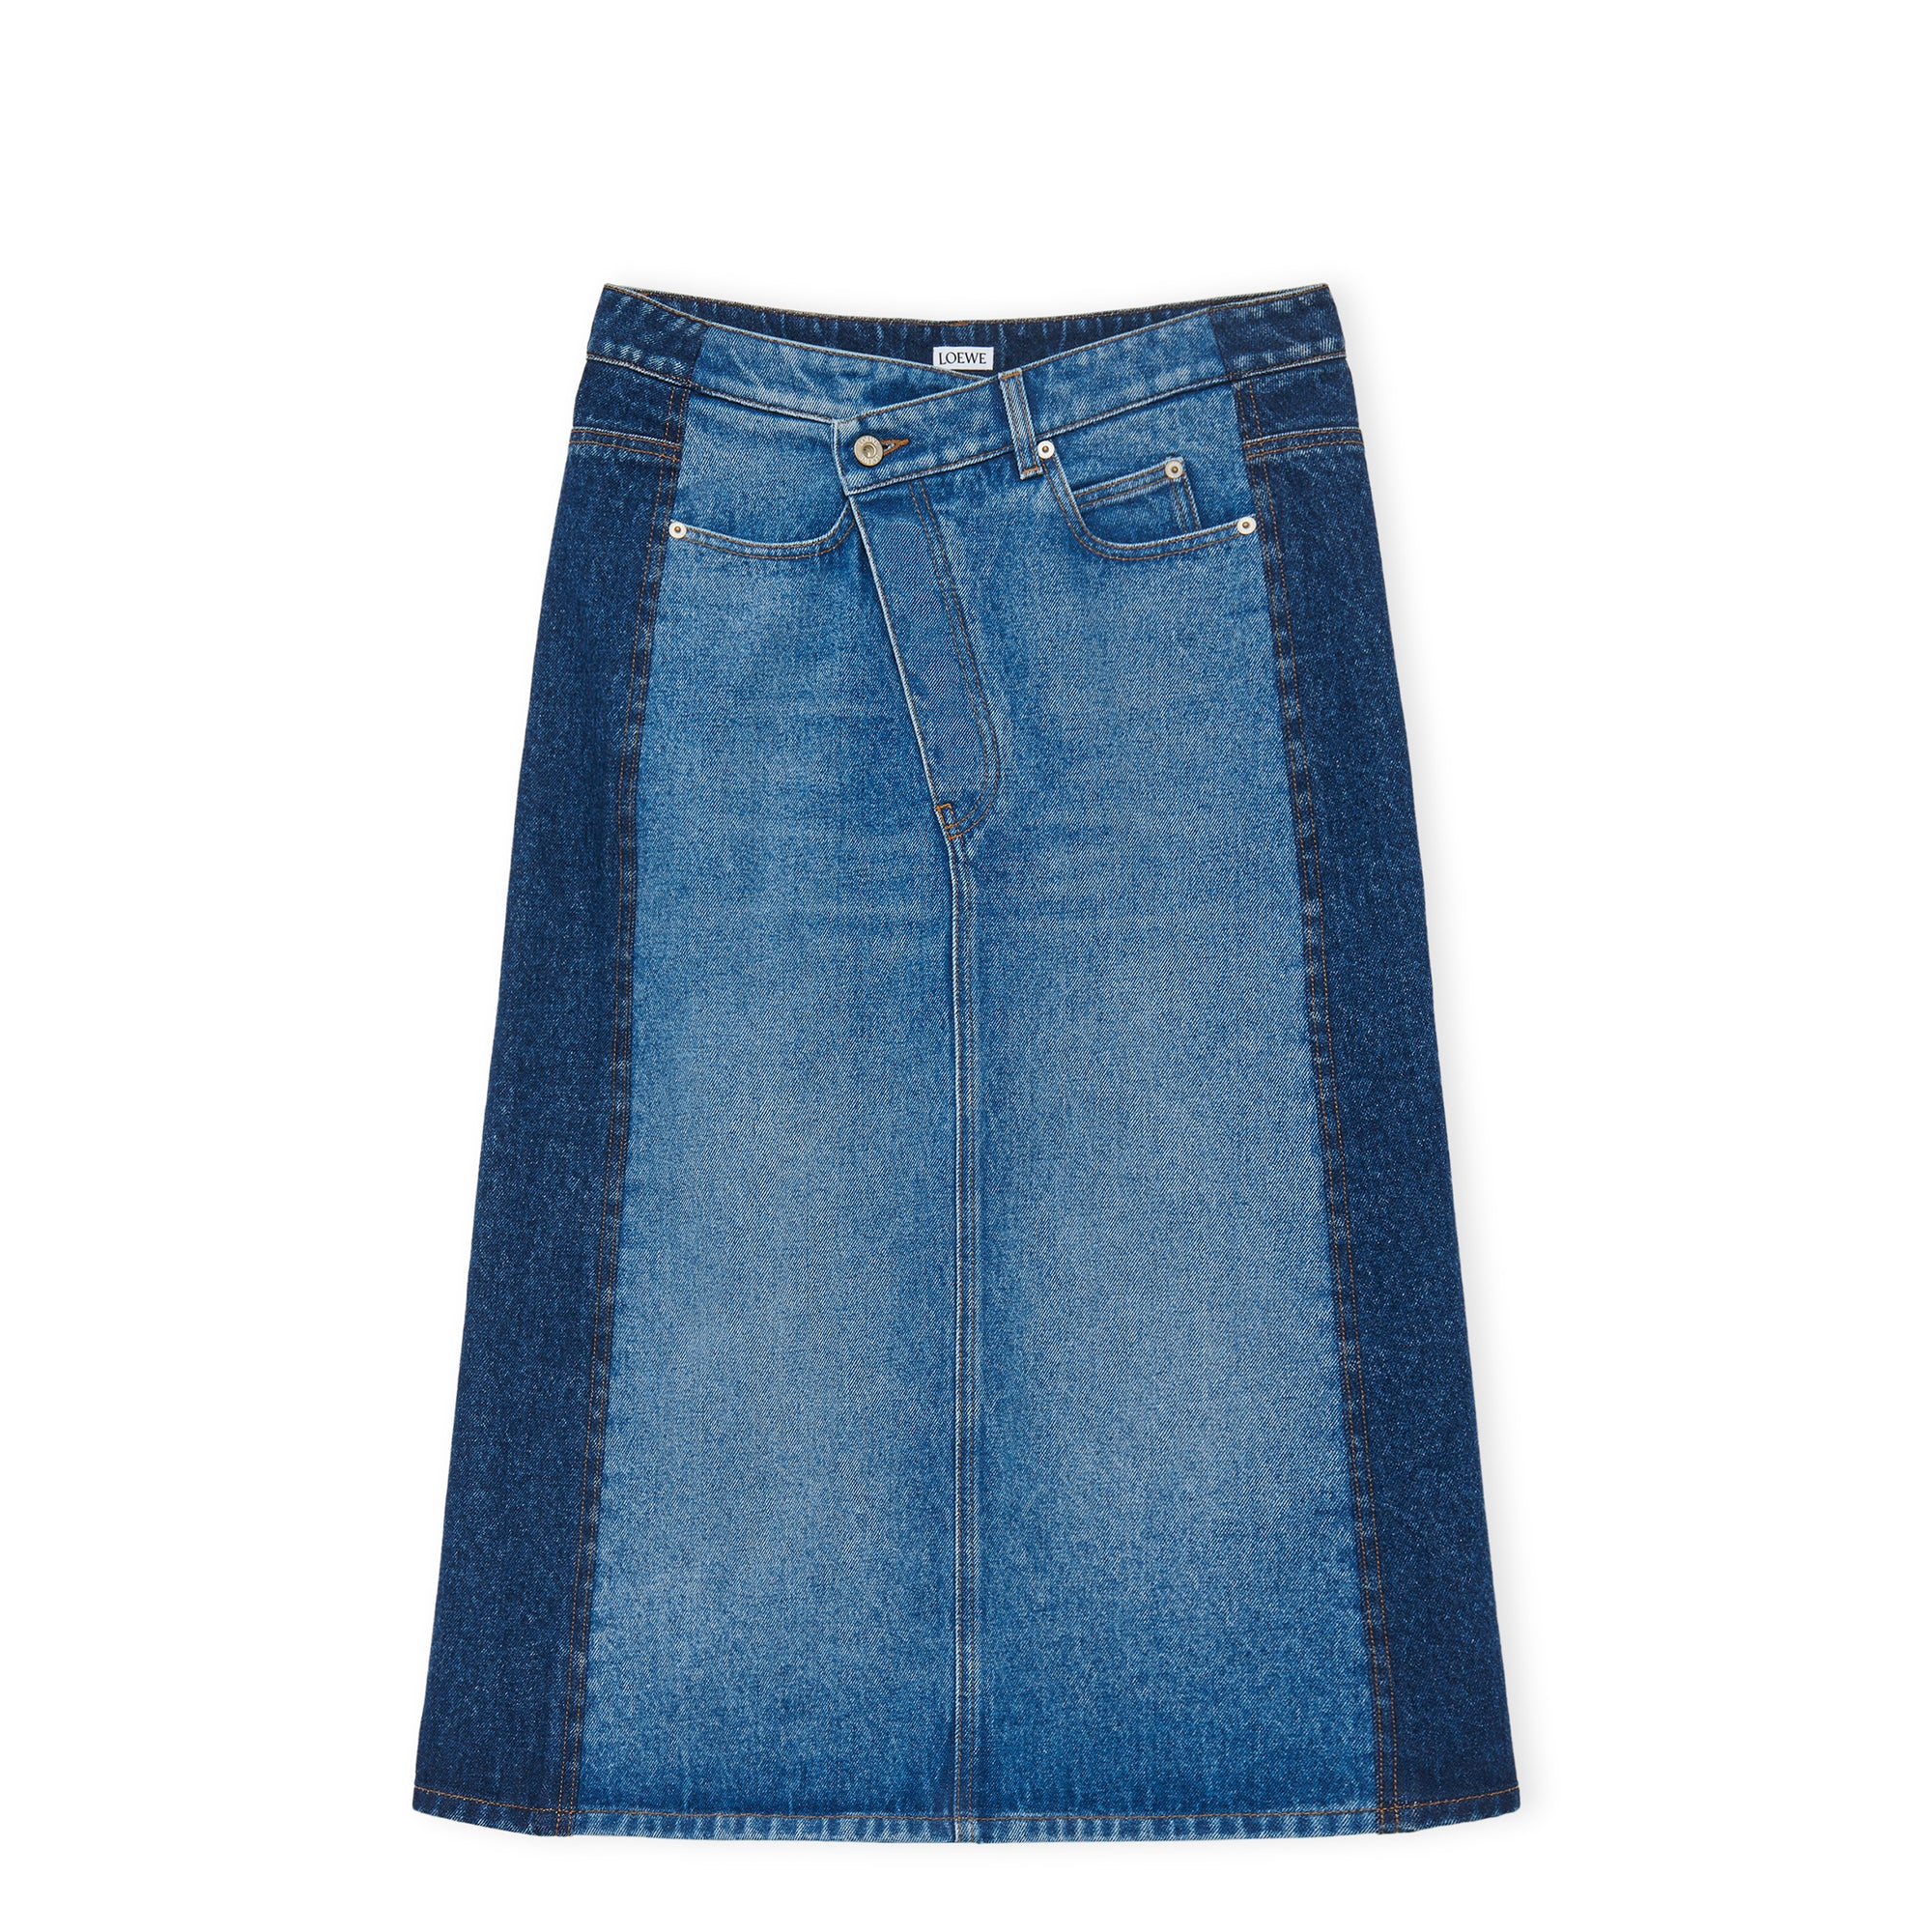 Loewe - Women’s Deconstructed Skirt - (Denim Blue) view 1